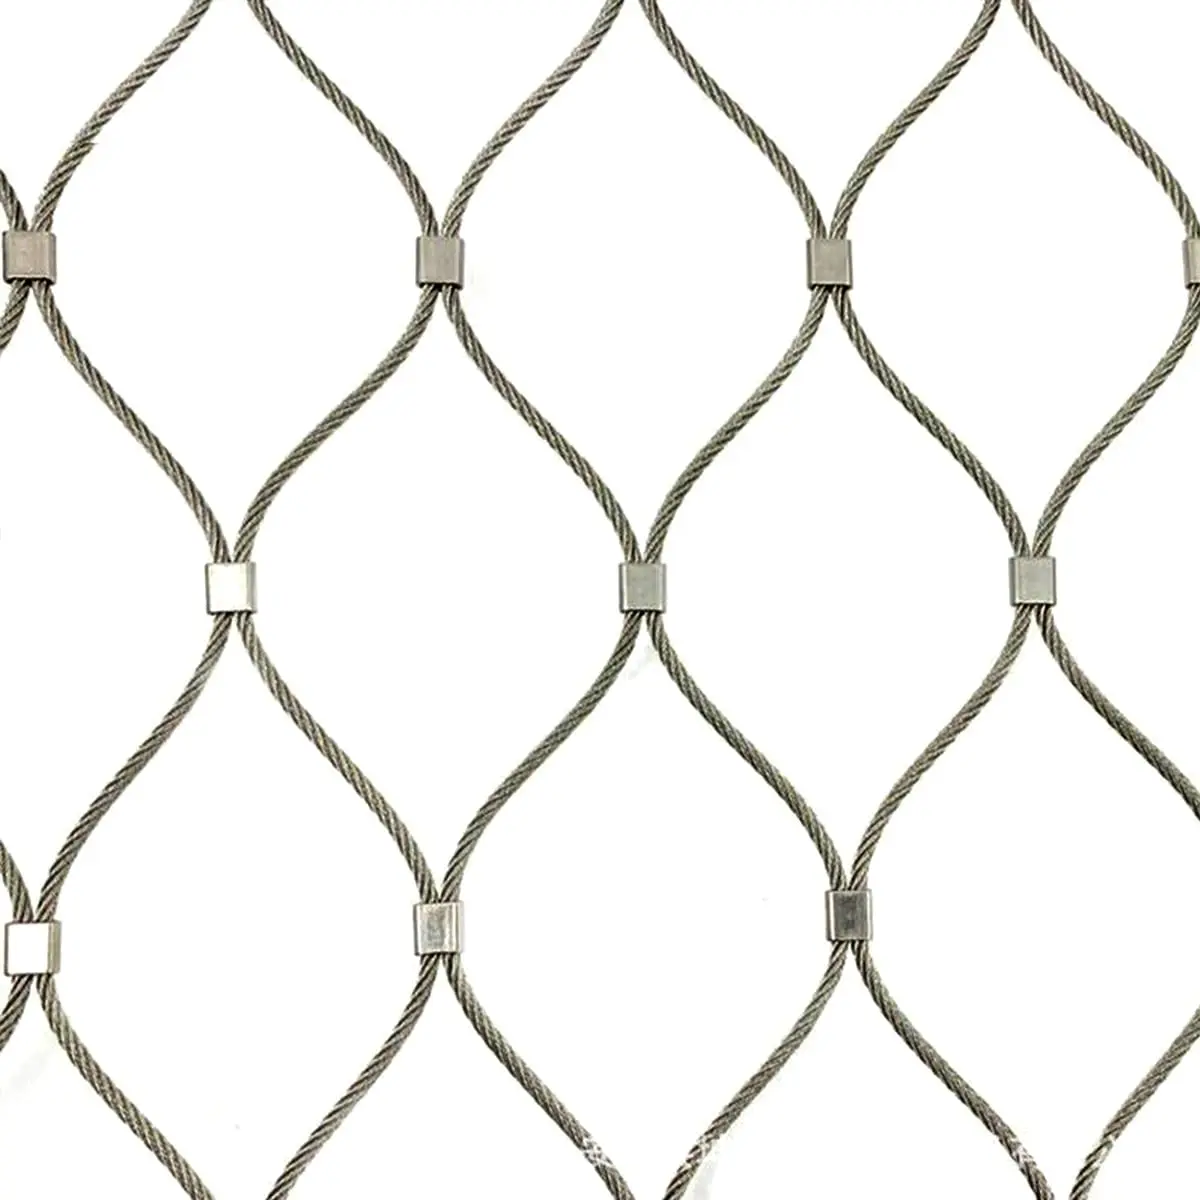 FengYoo Steel Garden reticuli XII Gauge 12X40 cervi filum Fence -80Mesh- Safety Netting animal Obex Fence GALLINA Nettin